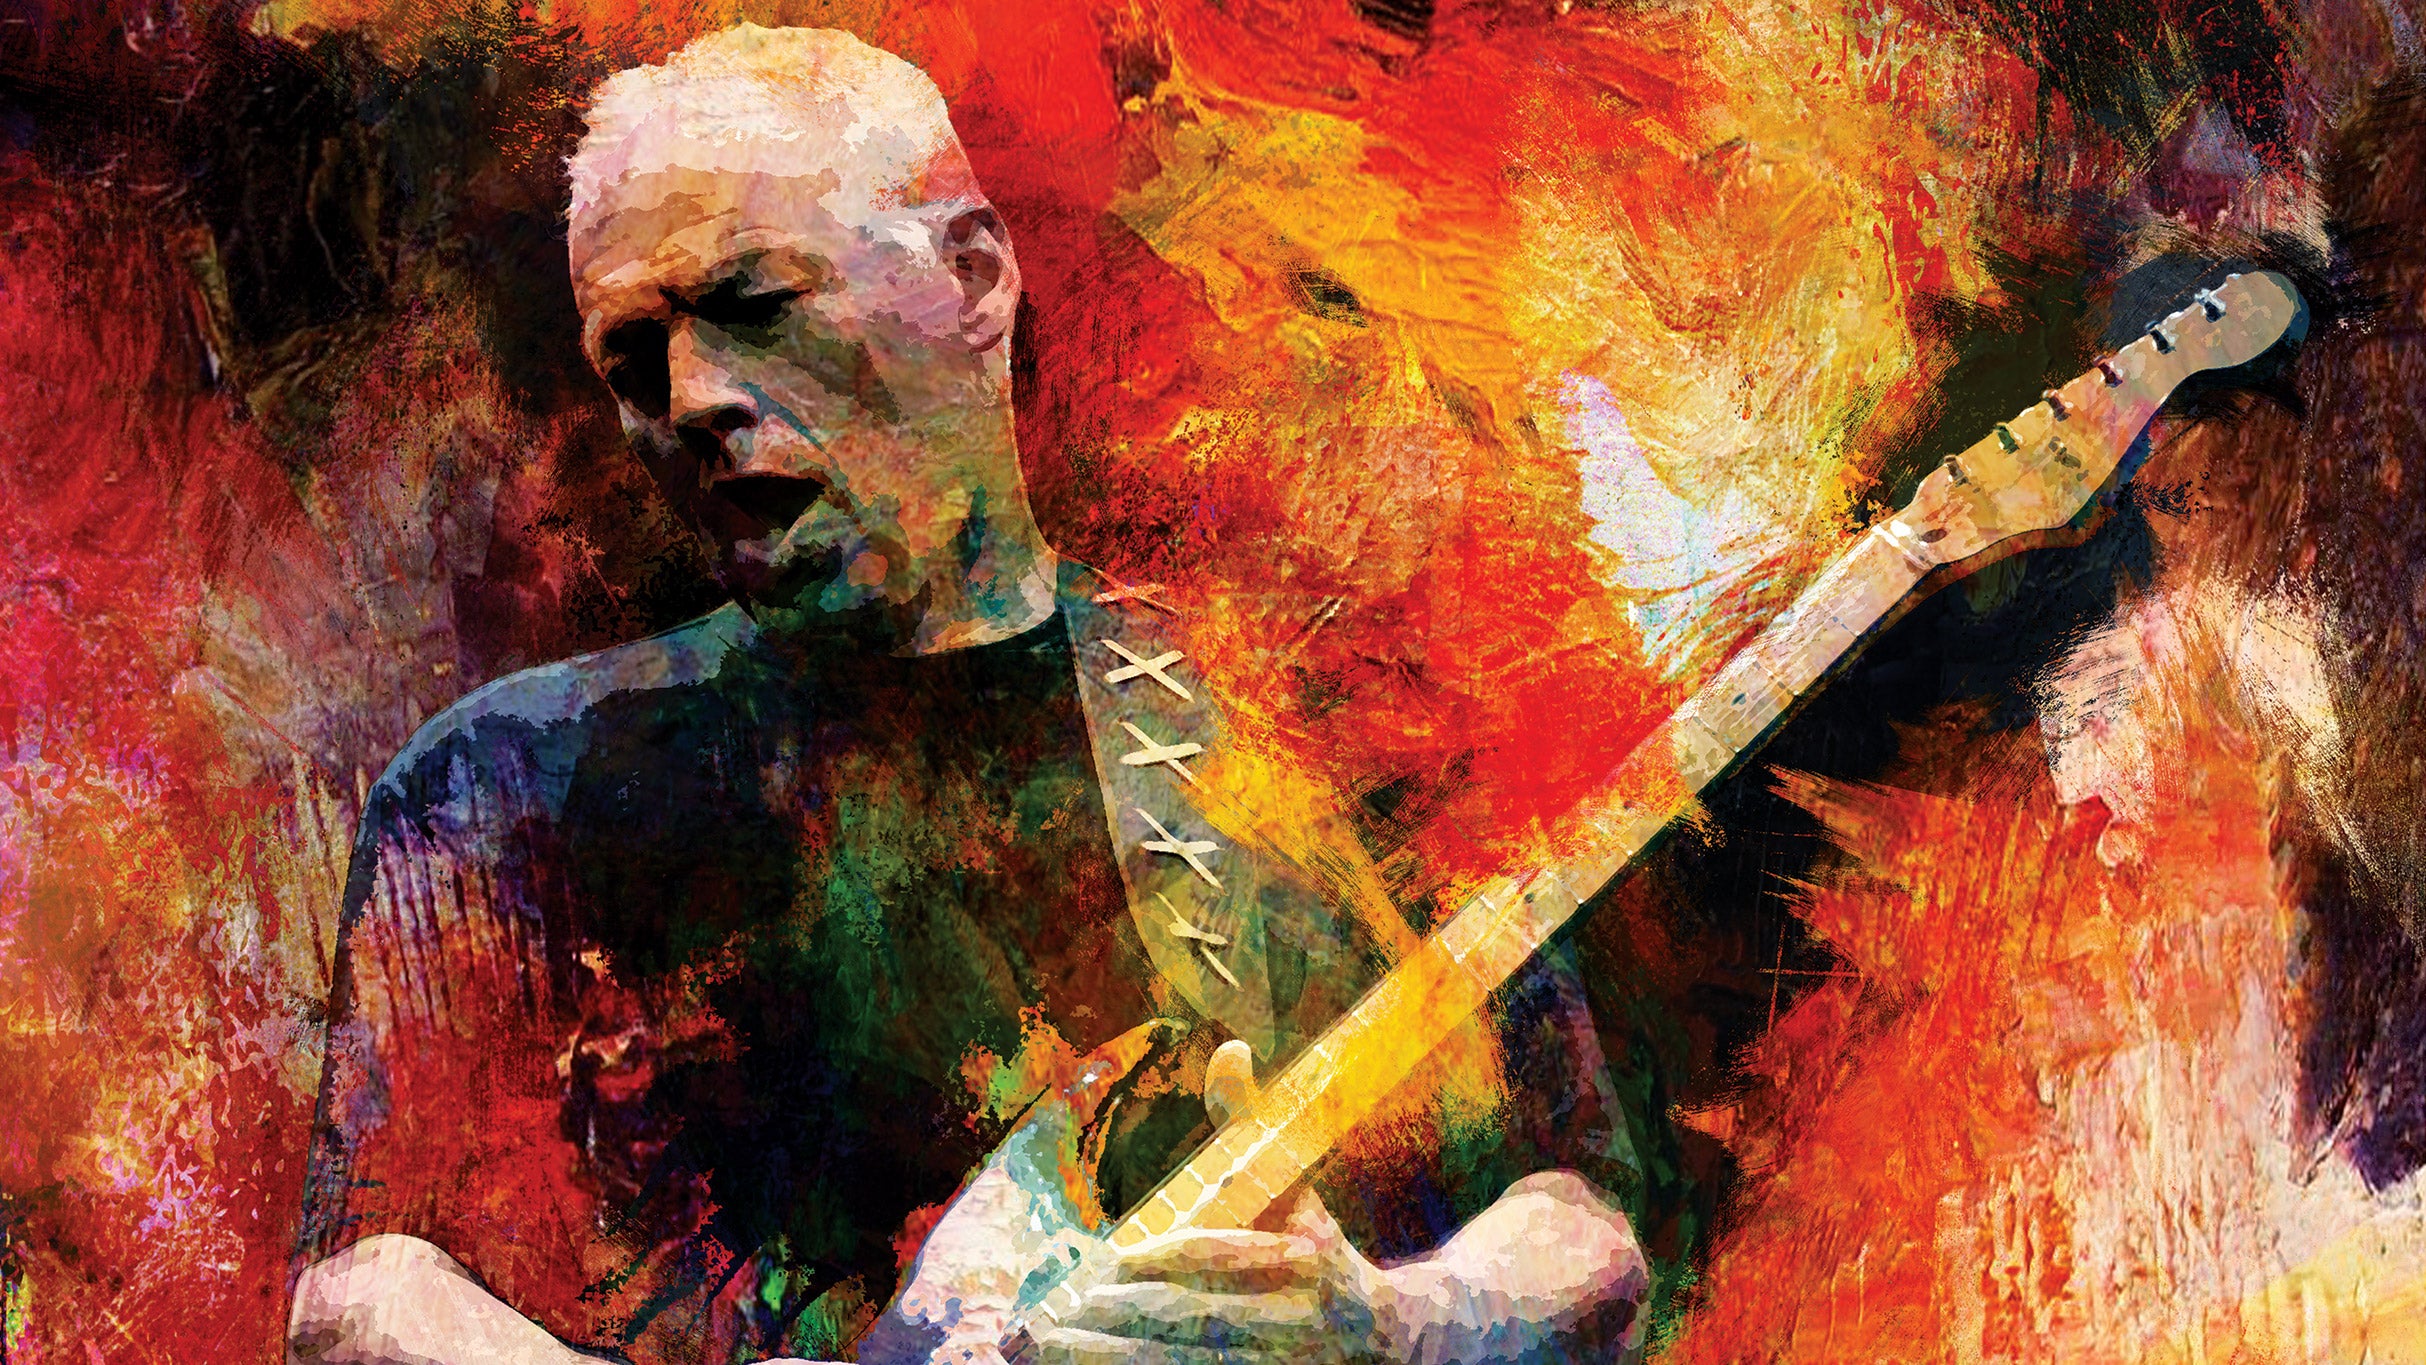 David Gilmour in London promo photo for Fan presale offer code